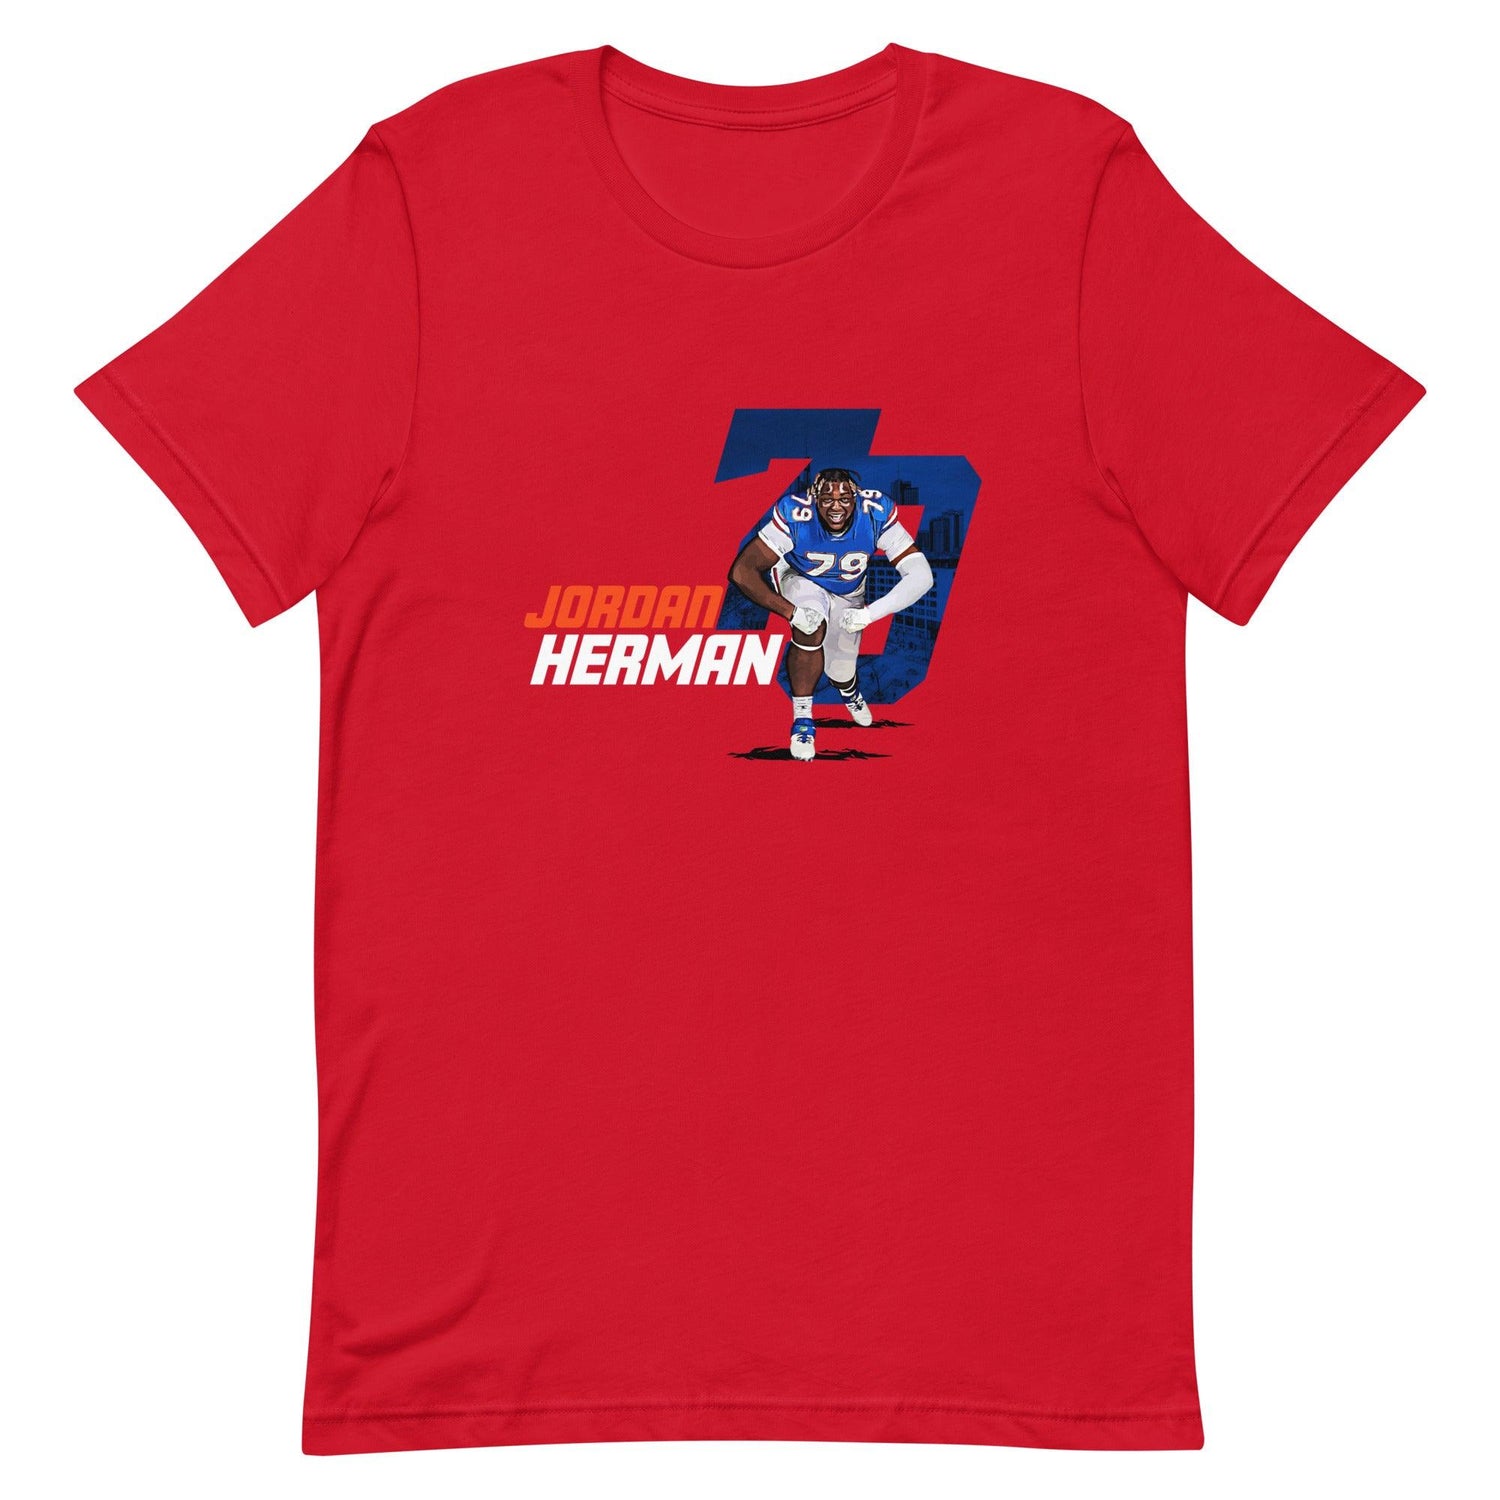 Jordan Herman "Gameday" t-shirt - Fan Arch